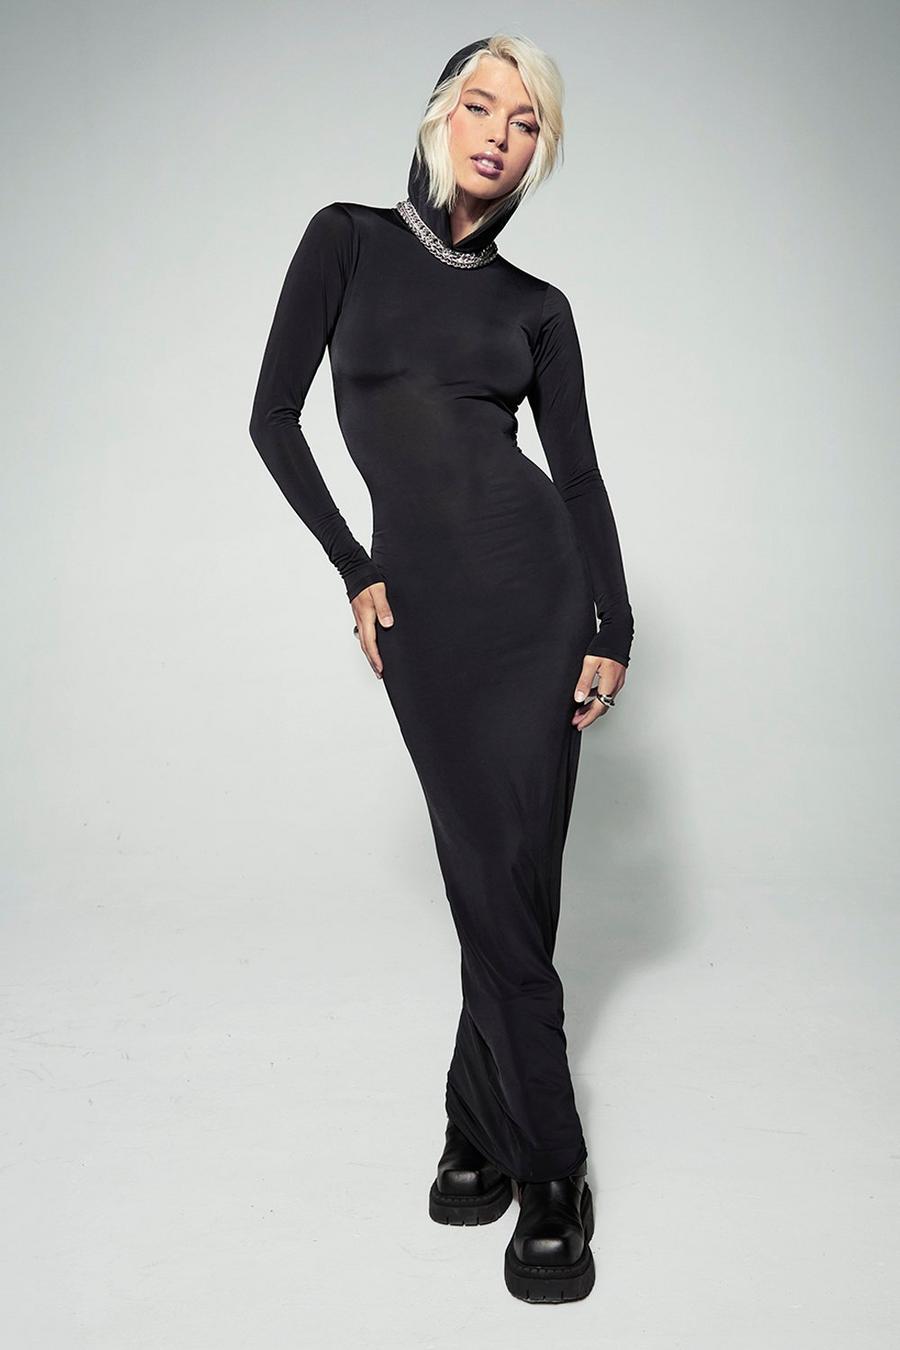 Black noir Kourtney Kardashian Barker Slinky Hooded Maxi Dress